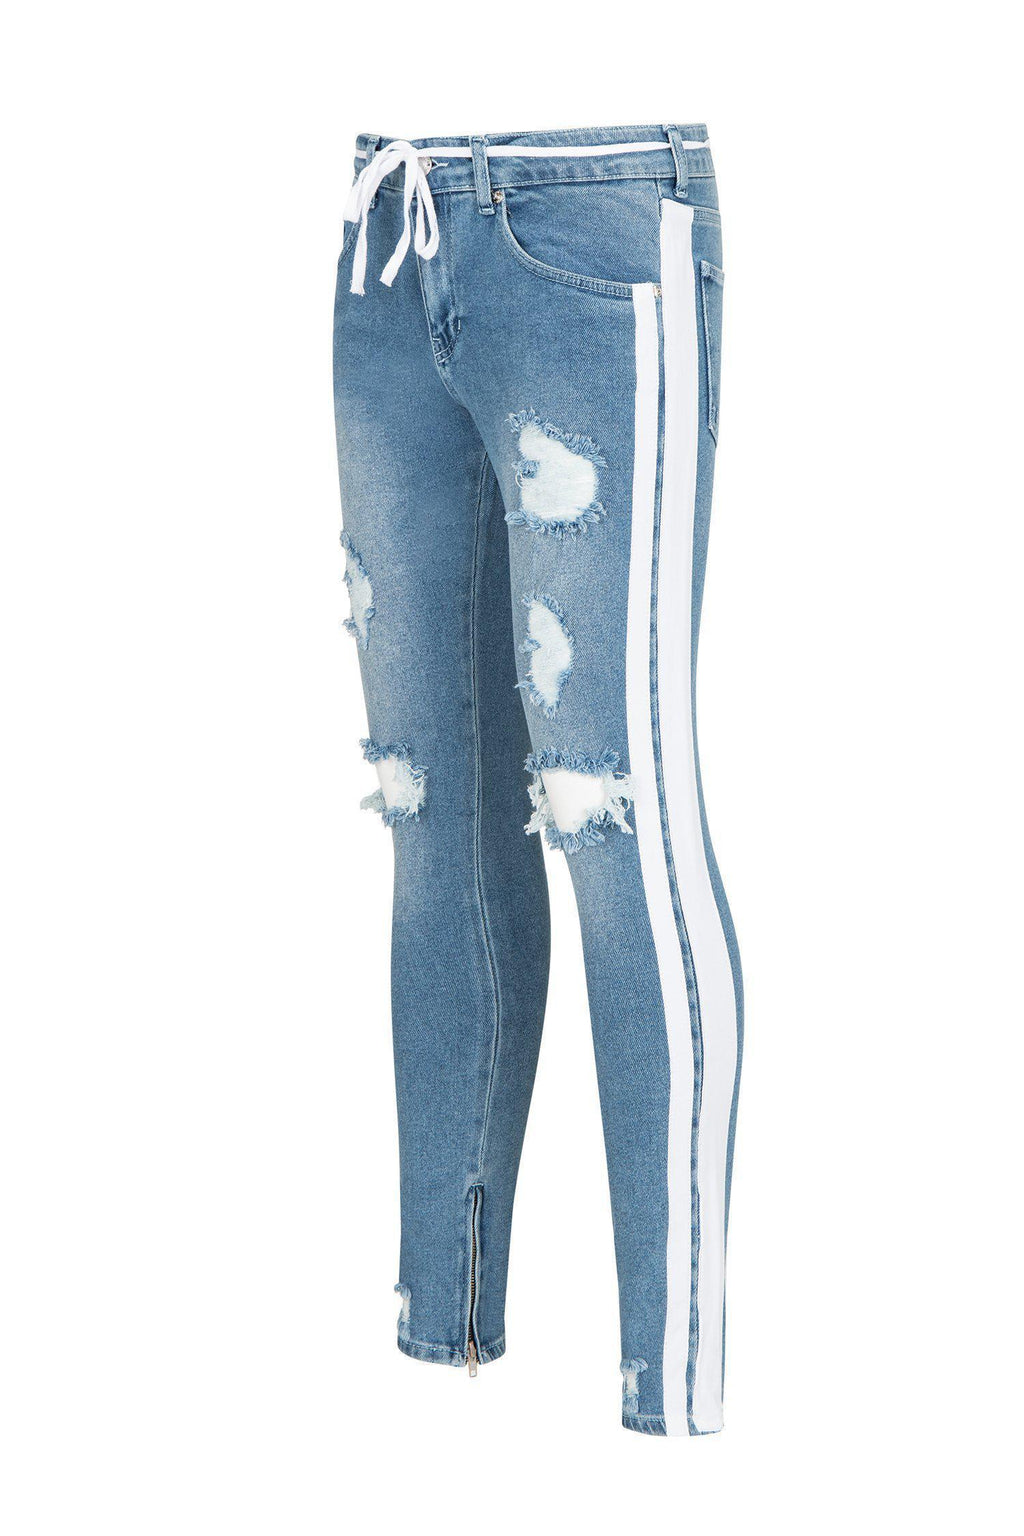 distressed light blue jeans